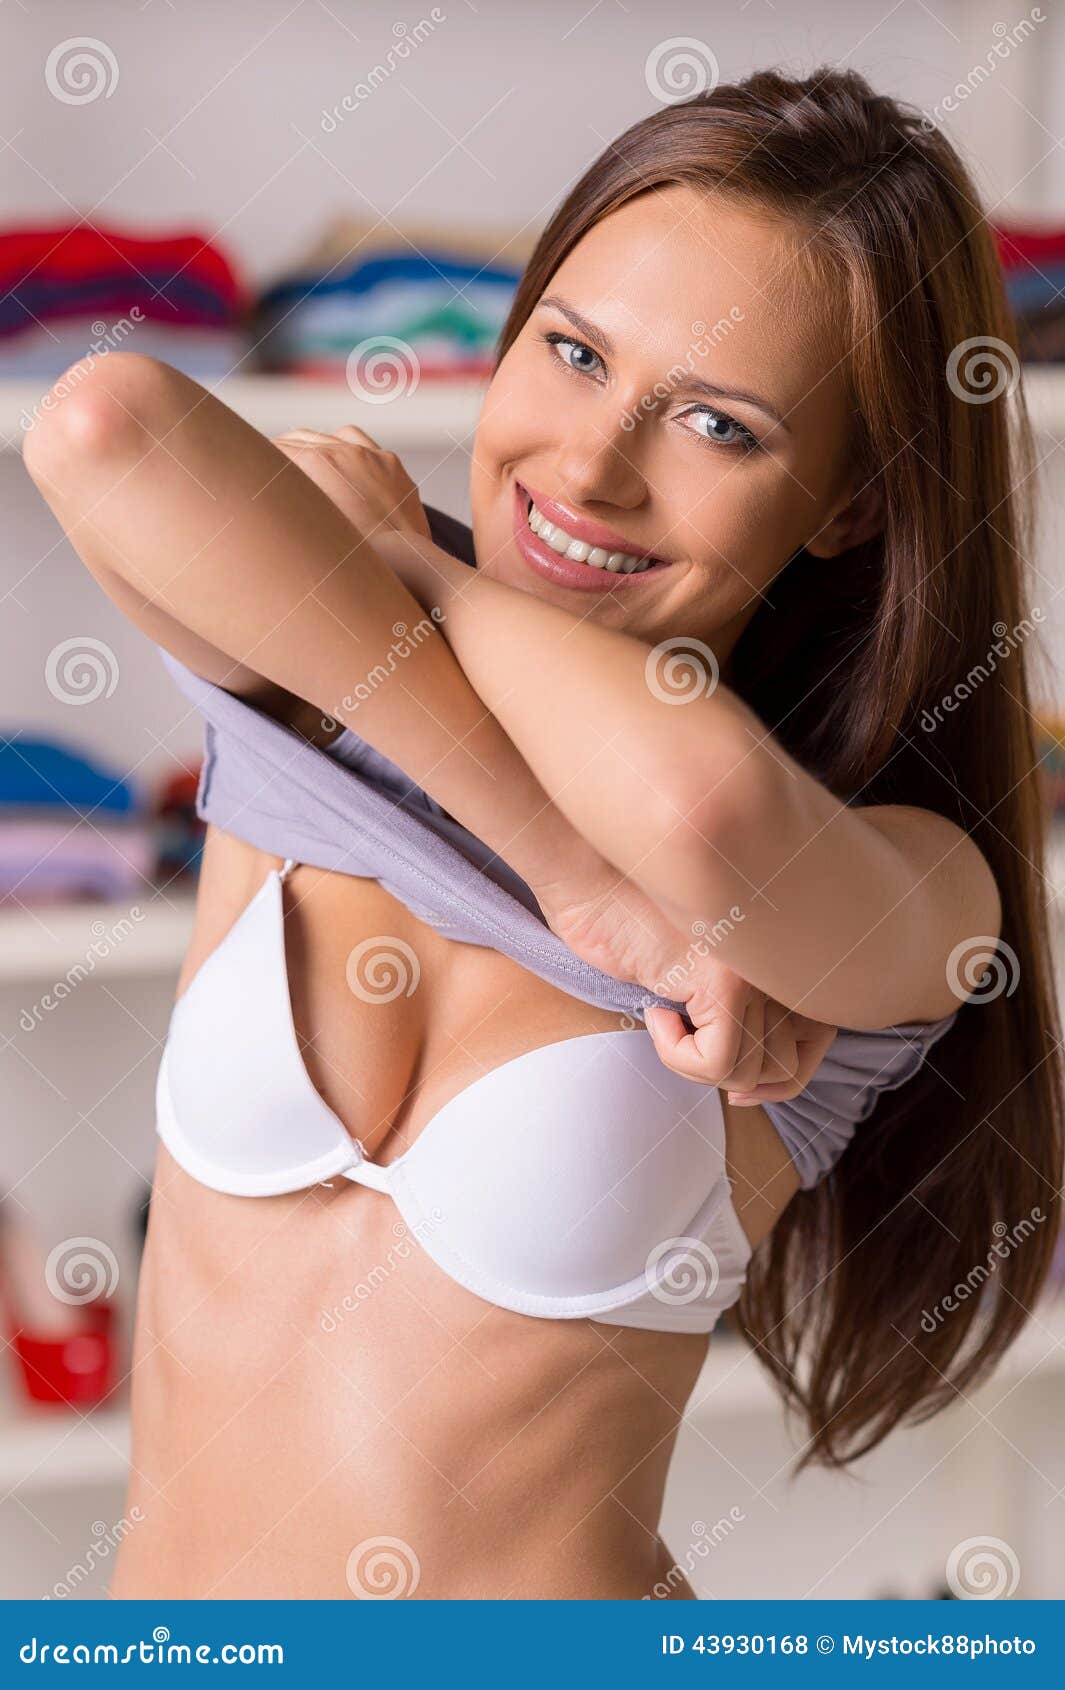 angela kade add girl takes off shirt and bra photo